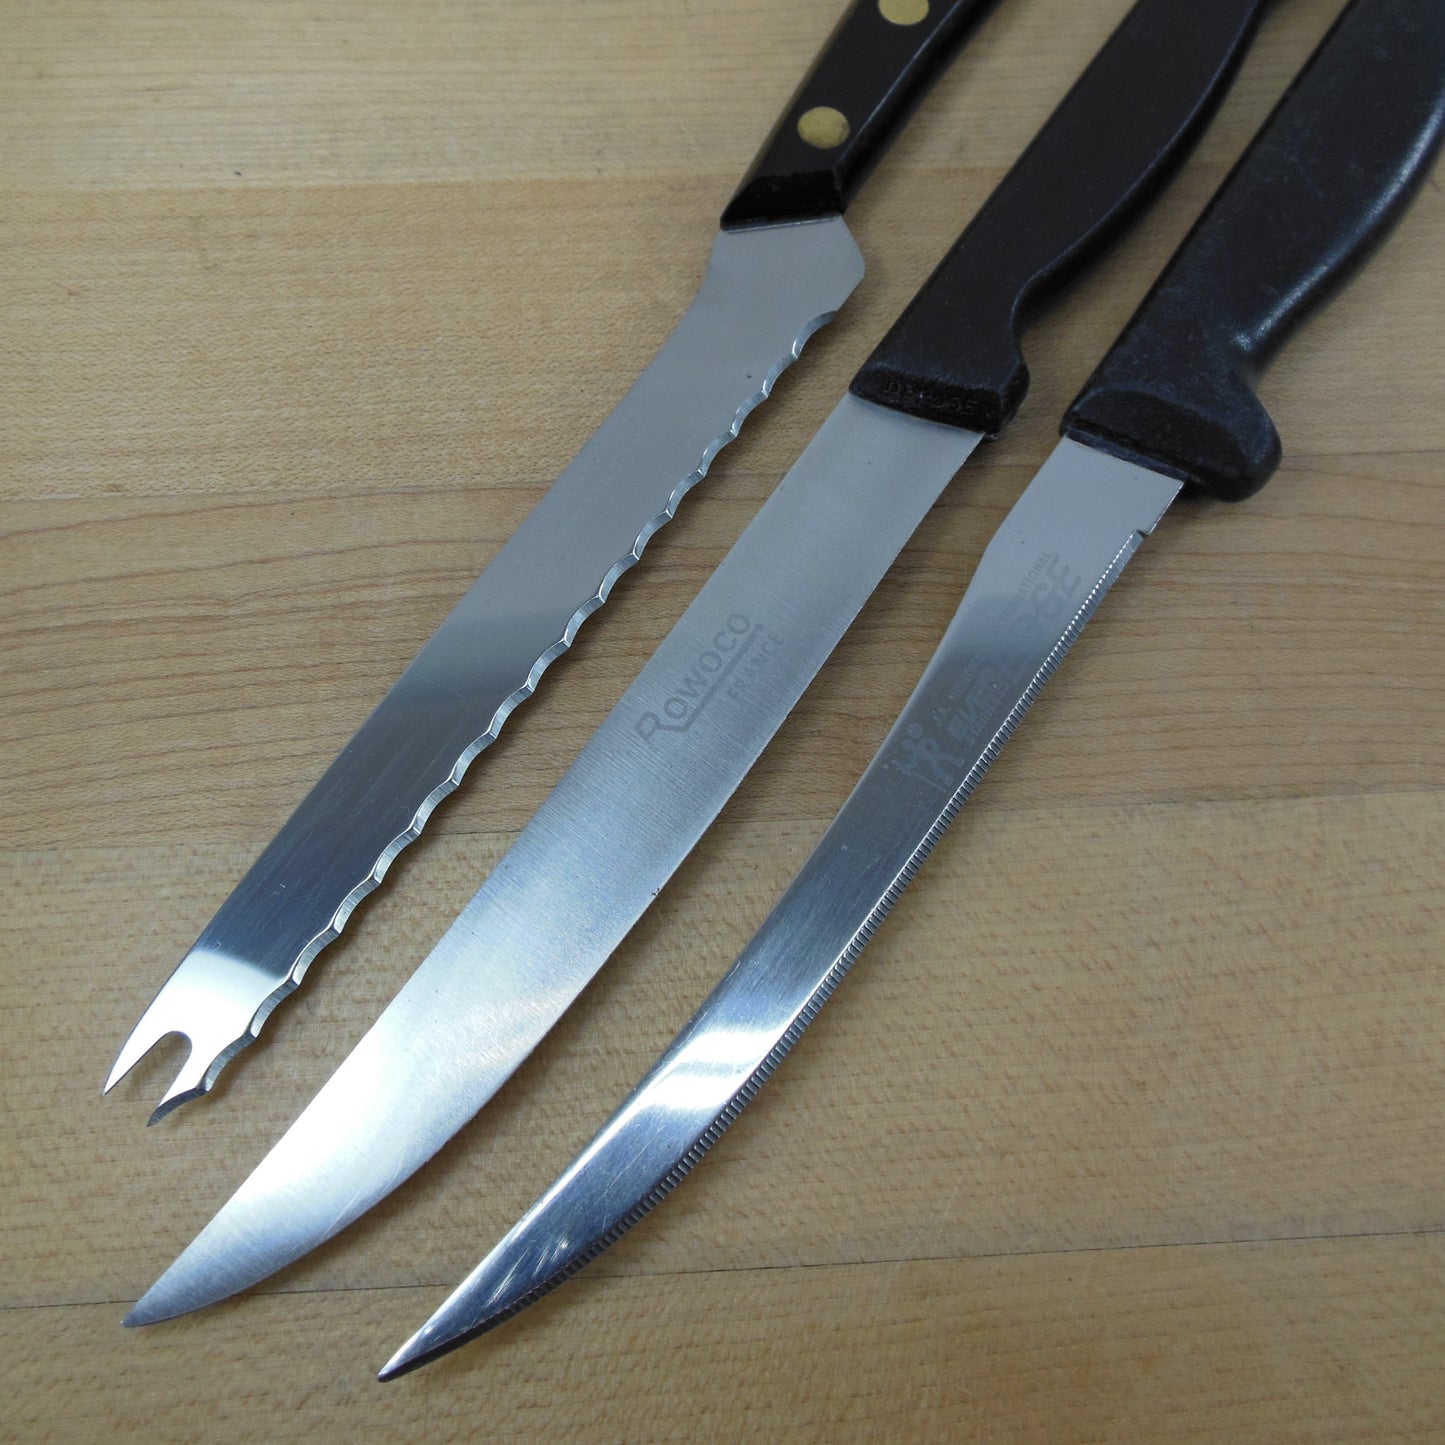 Stainless Kitchen Knife Trio - Henckels Tomato, Rowoco Utility, Robinson Used